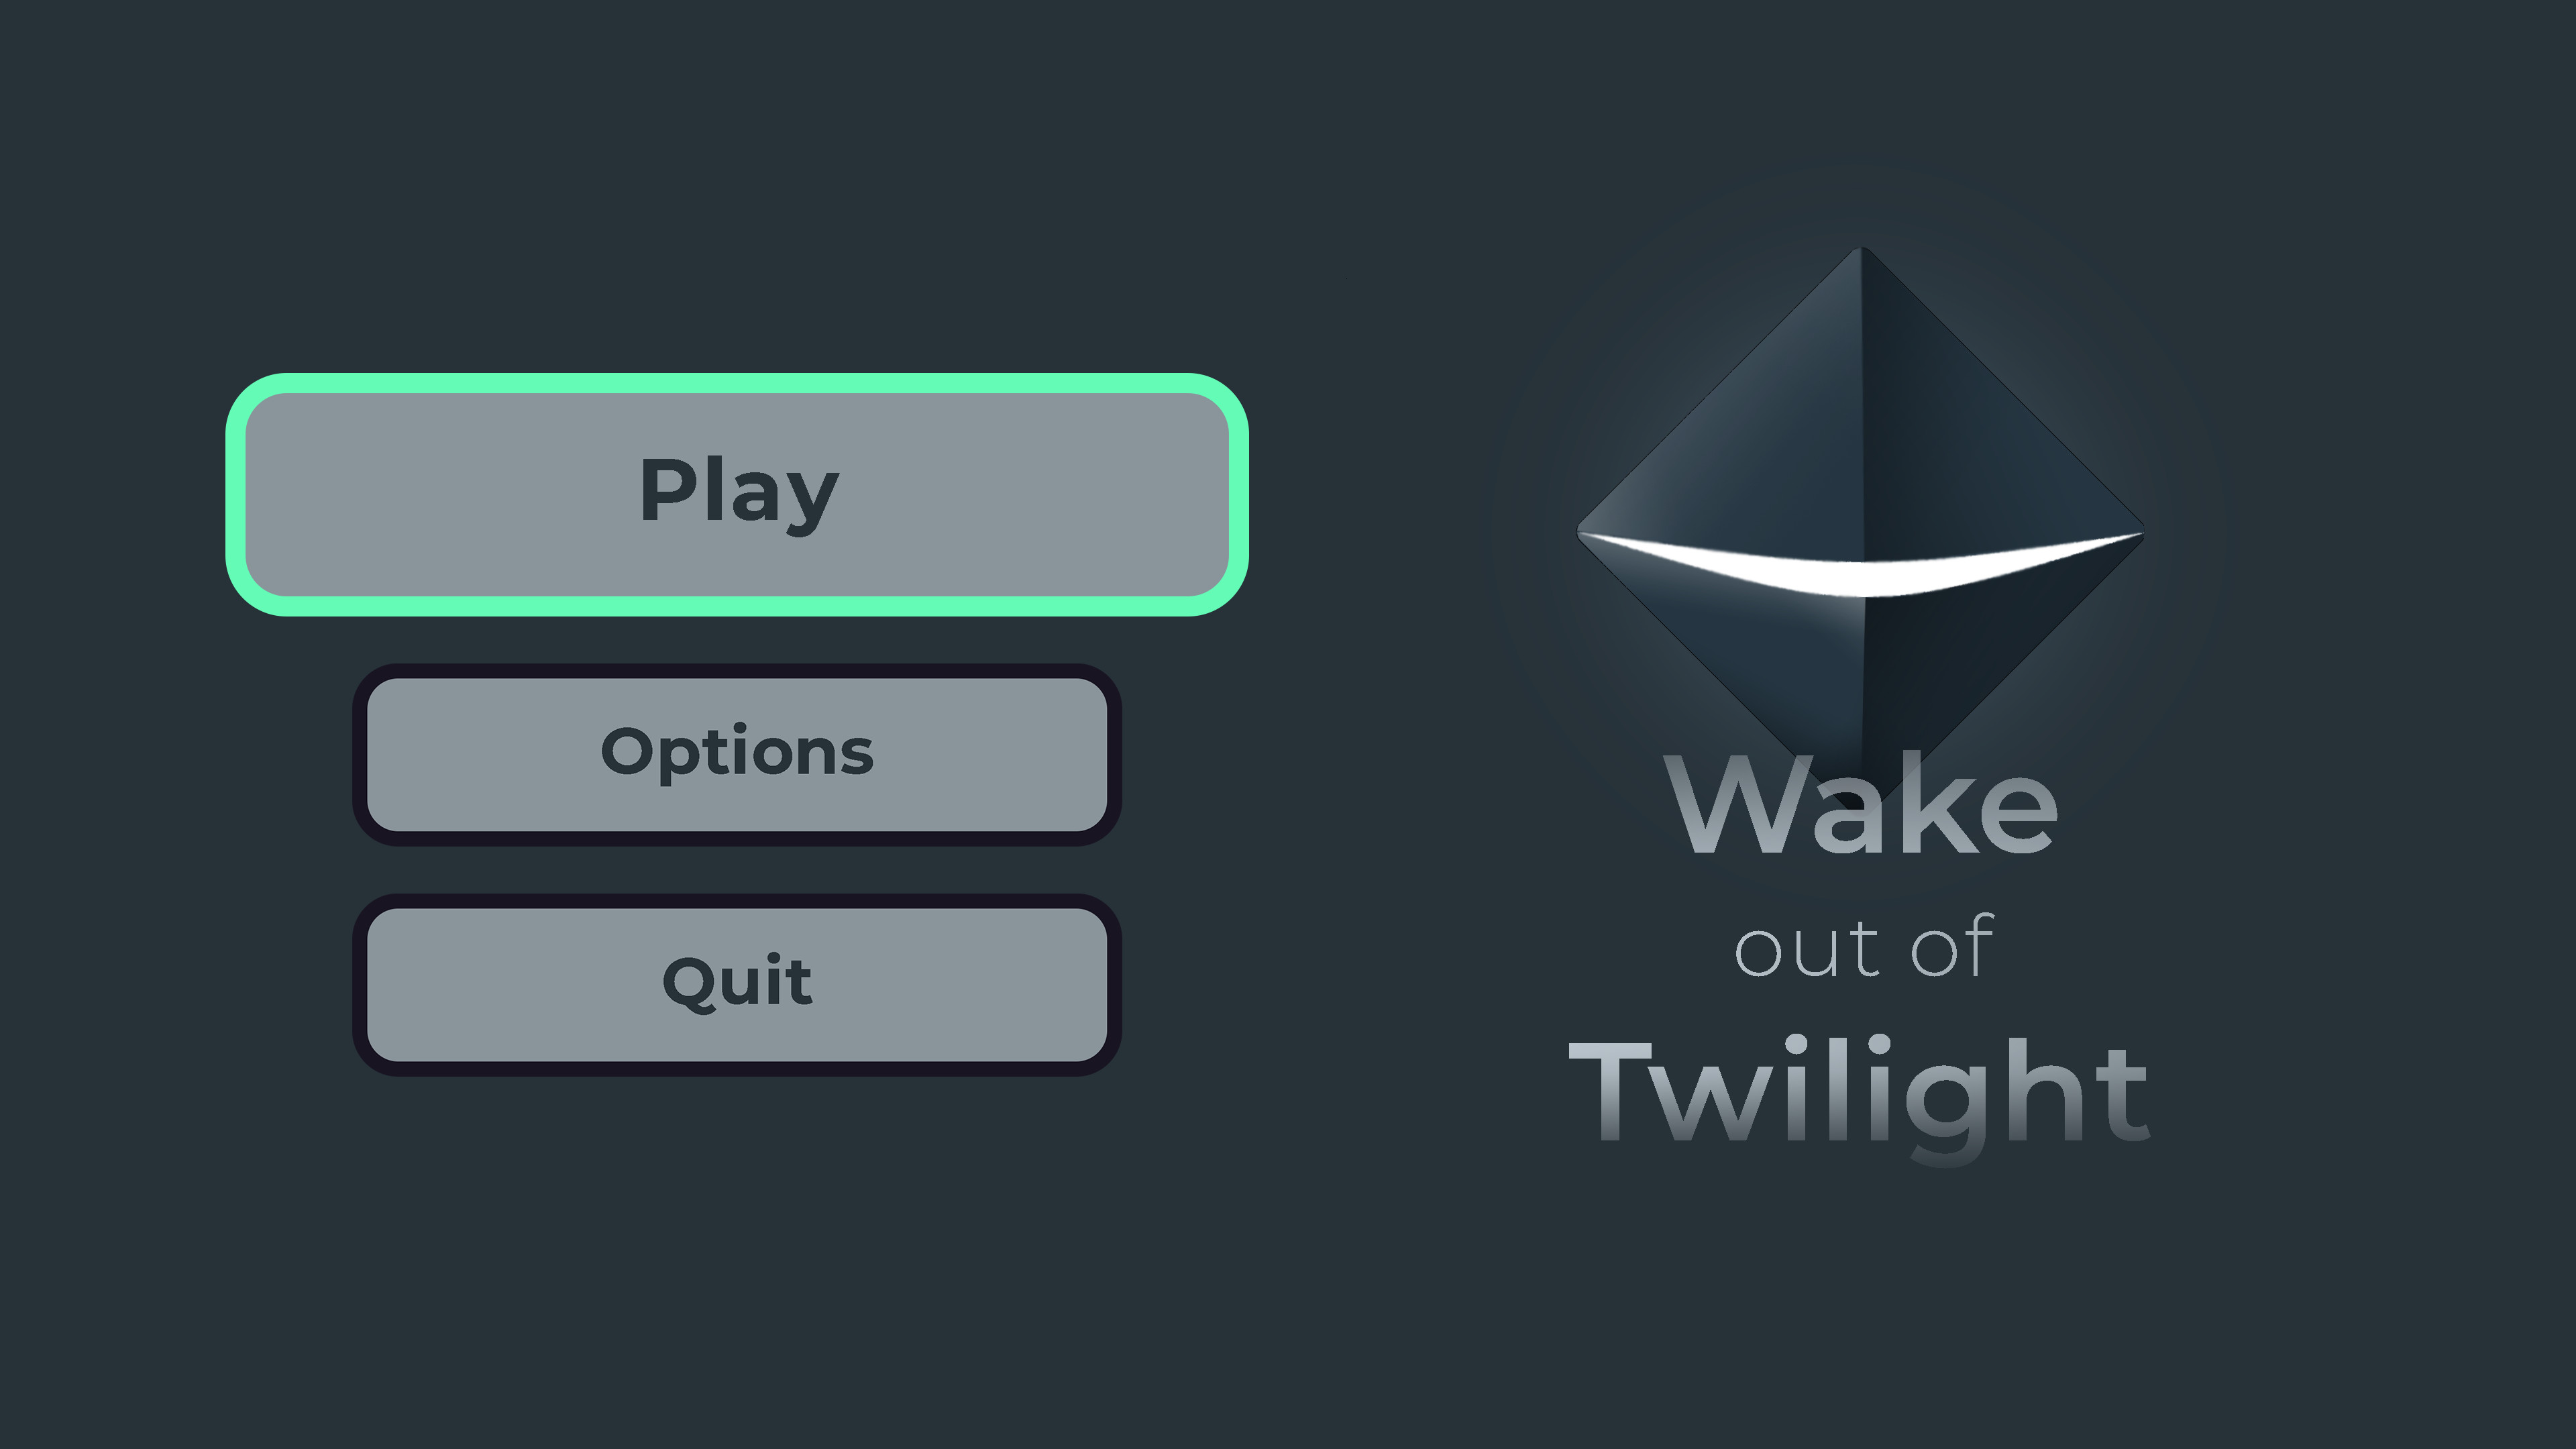 Wake out of Twilight screenshot